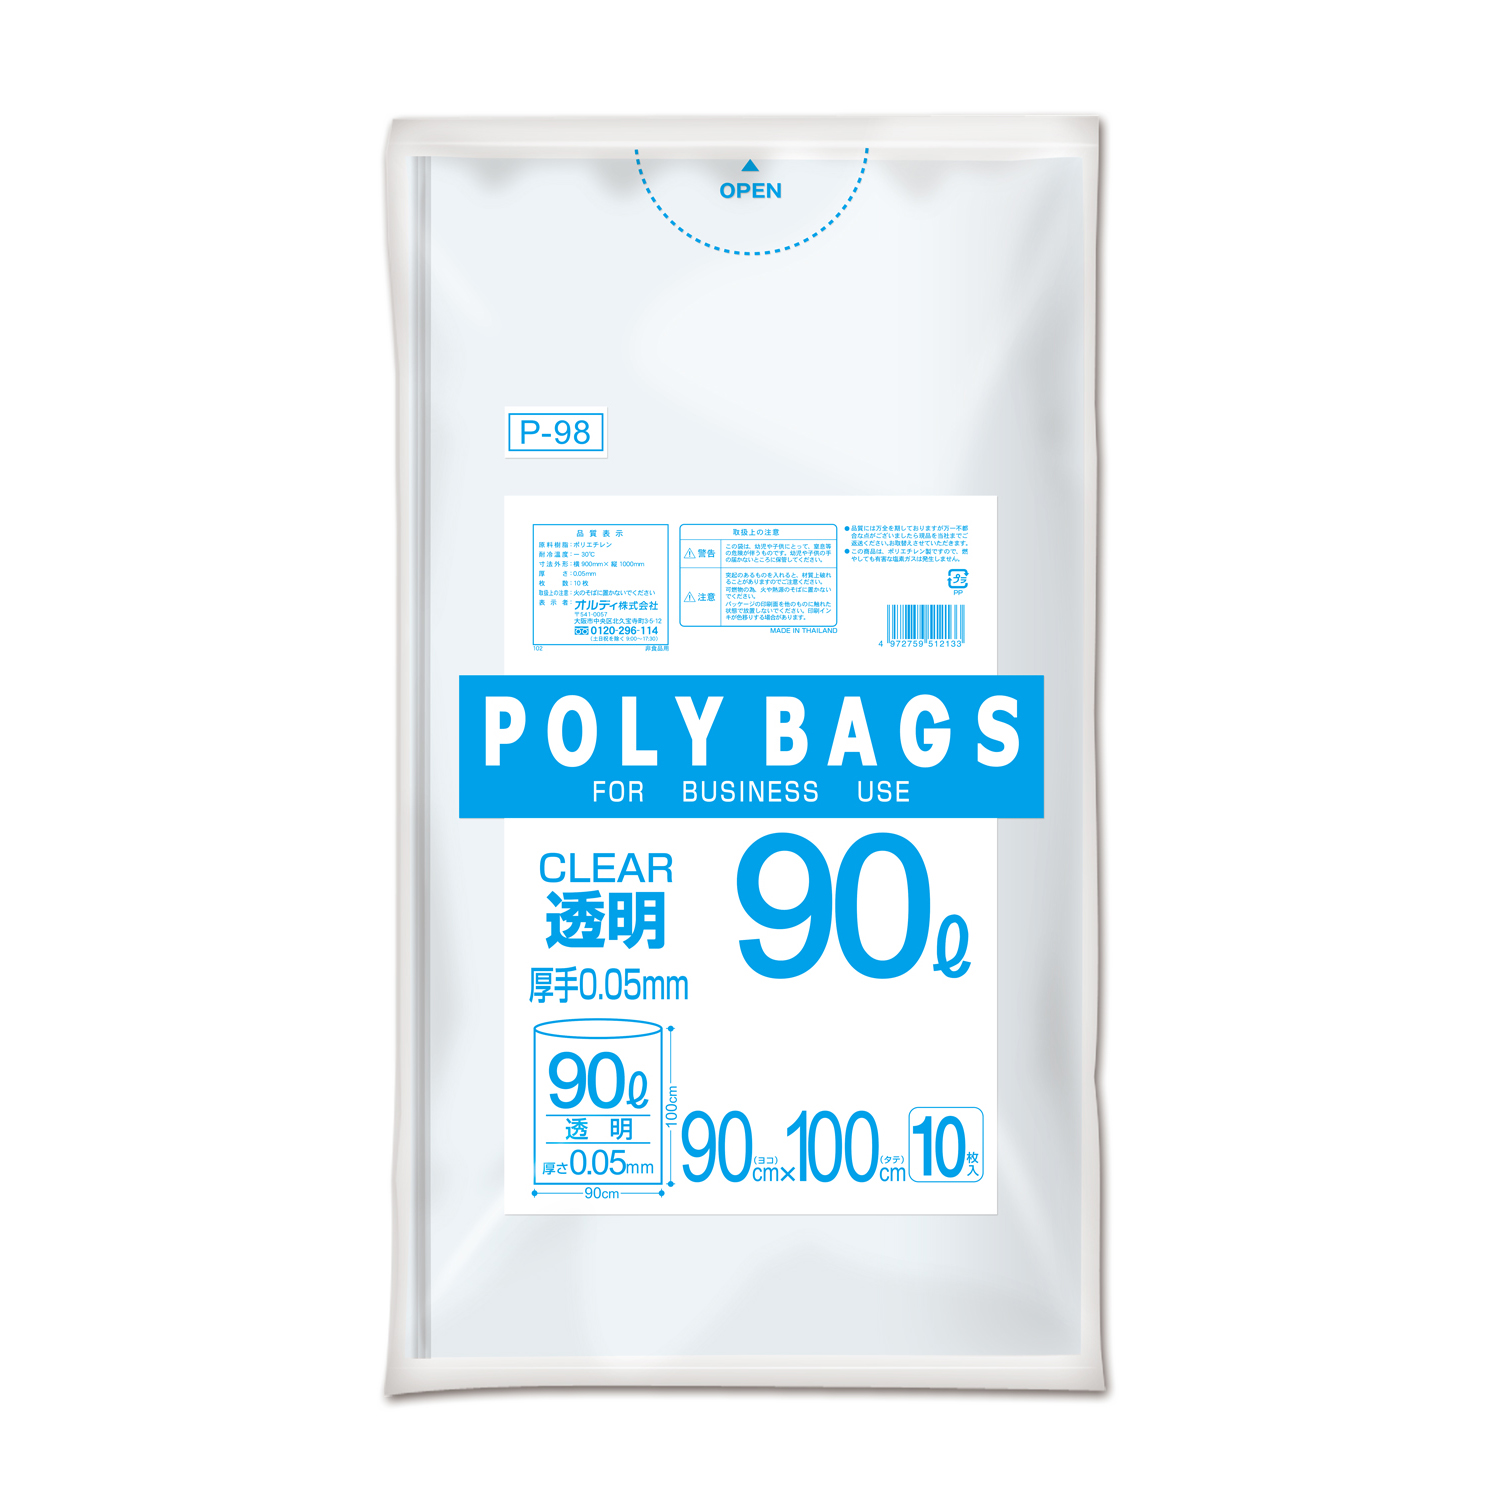 90L | ポリ袋/ごみ袋メーカー直販サイト【オルディダイレクト】